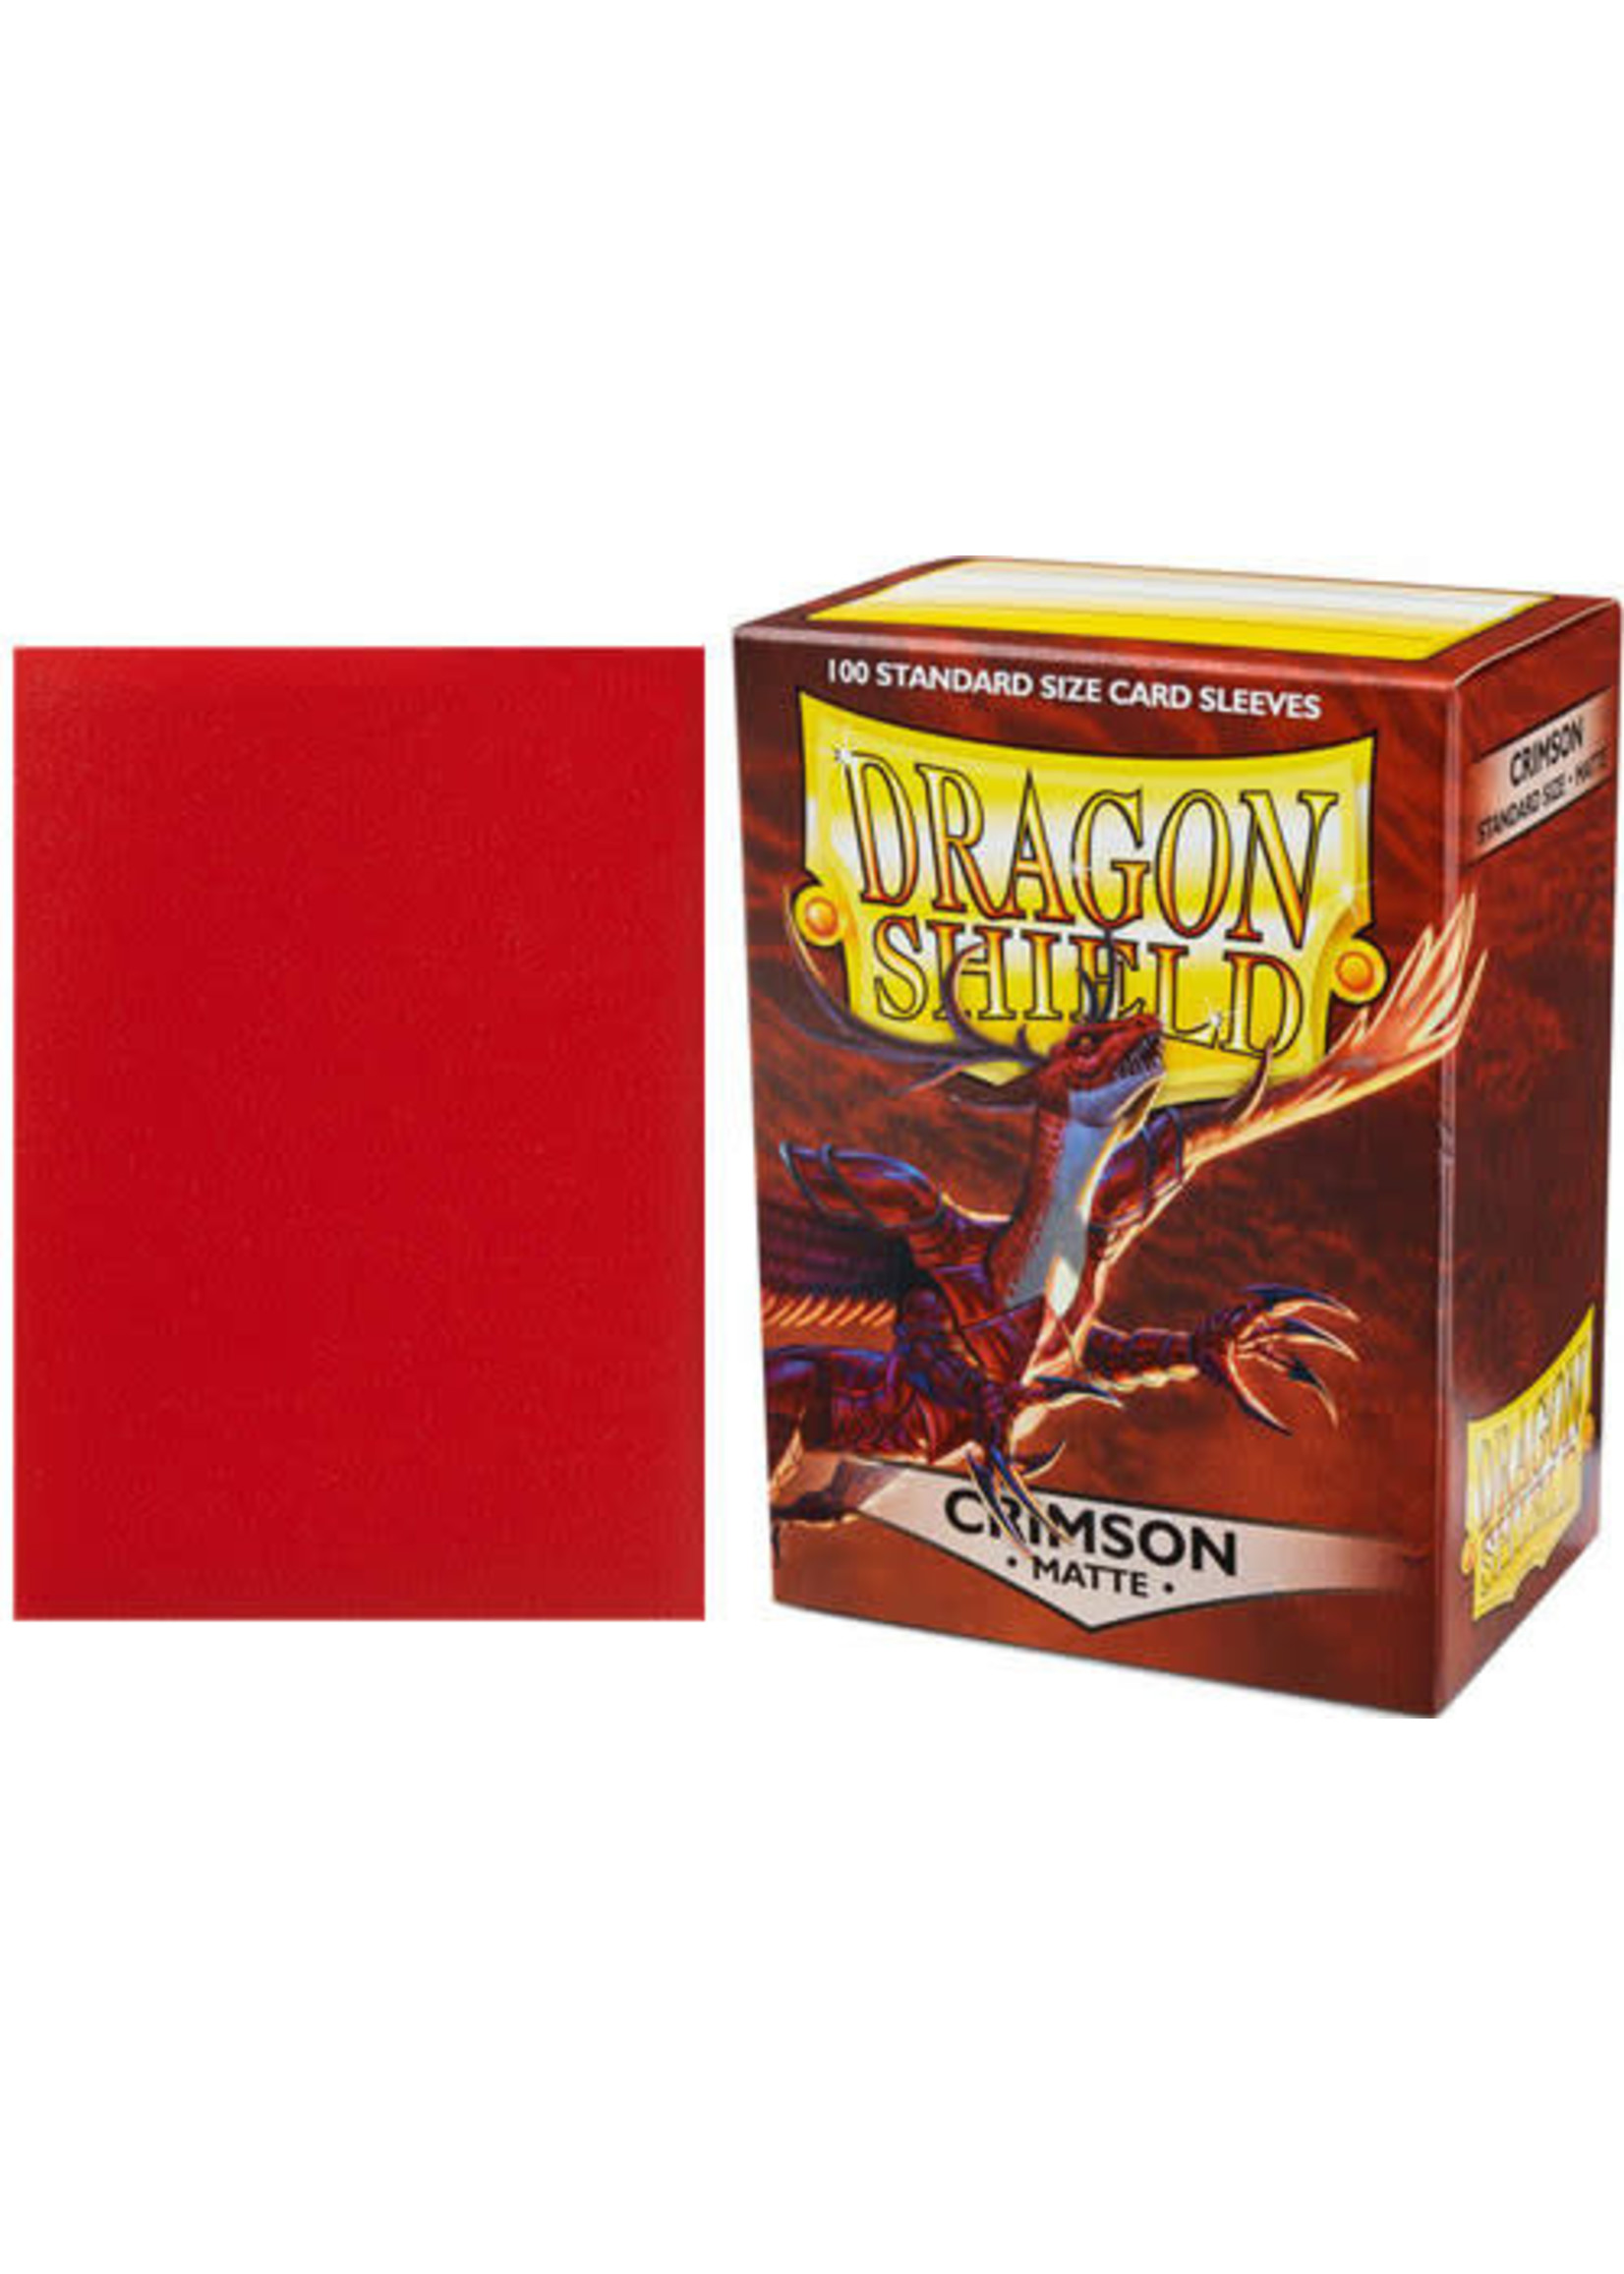 Arcane Tinmen Dragon Shield Matte Crimson (100)